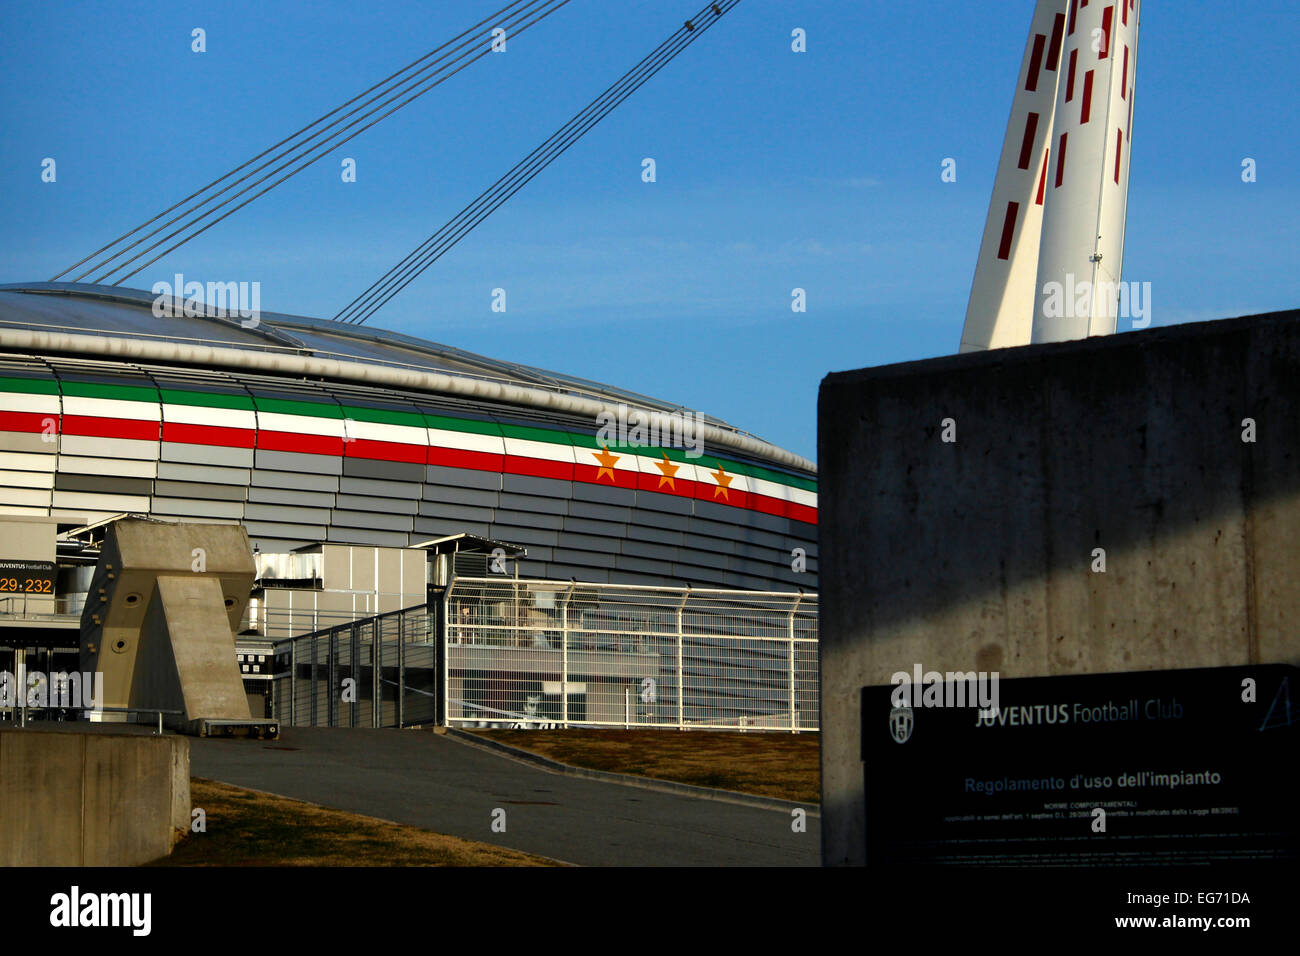 Juventus stadium also called Allianz Stadium in Turin, Italy Stock Photo